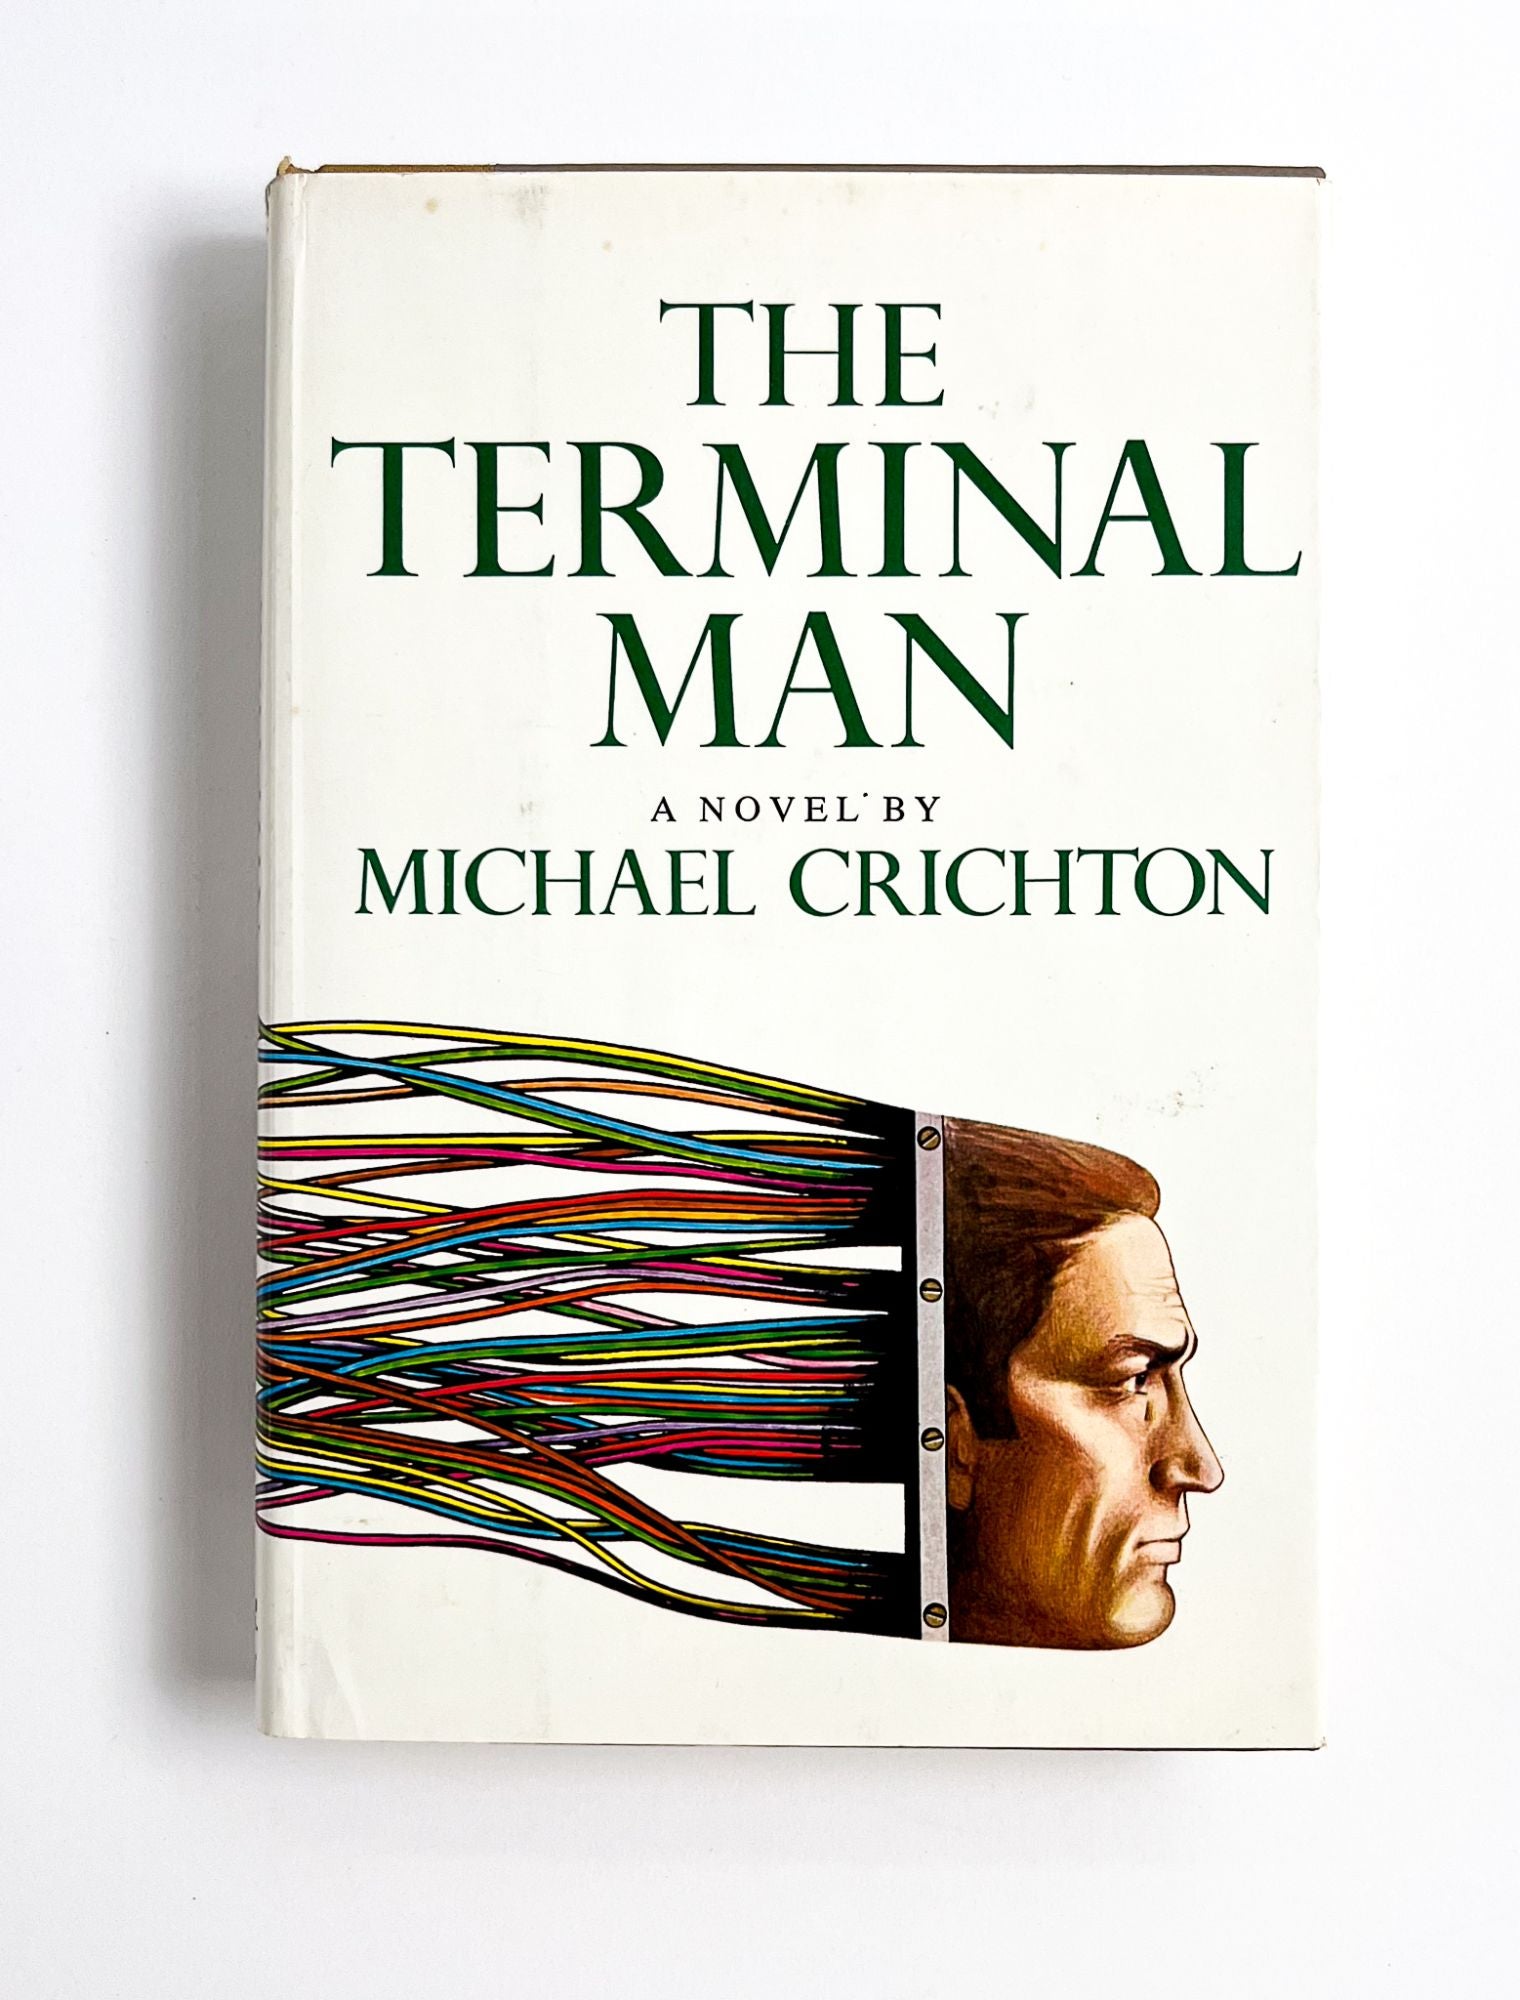 THE TERMINAL MAN by Michael Crichton on Type Punch Matrix